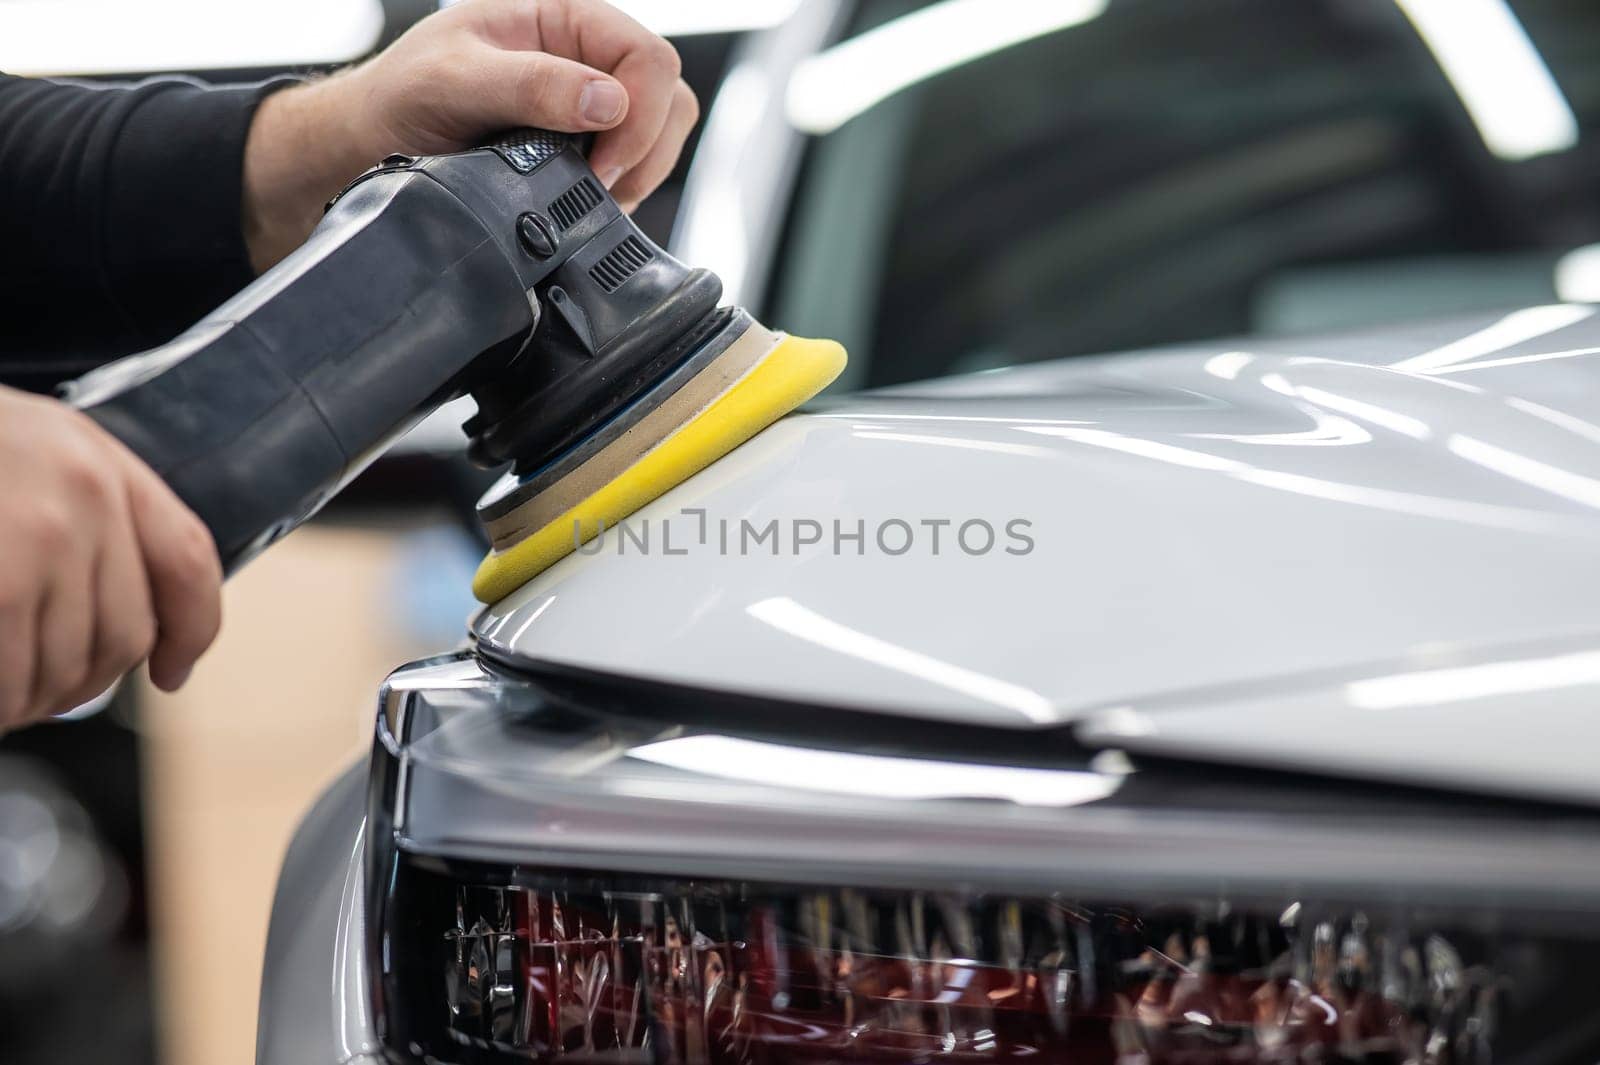 Process of polishing white car hood surface using orbital polishing machine